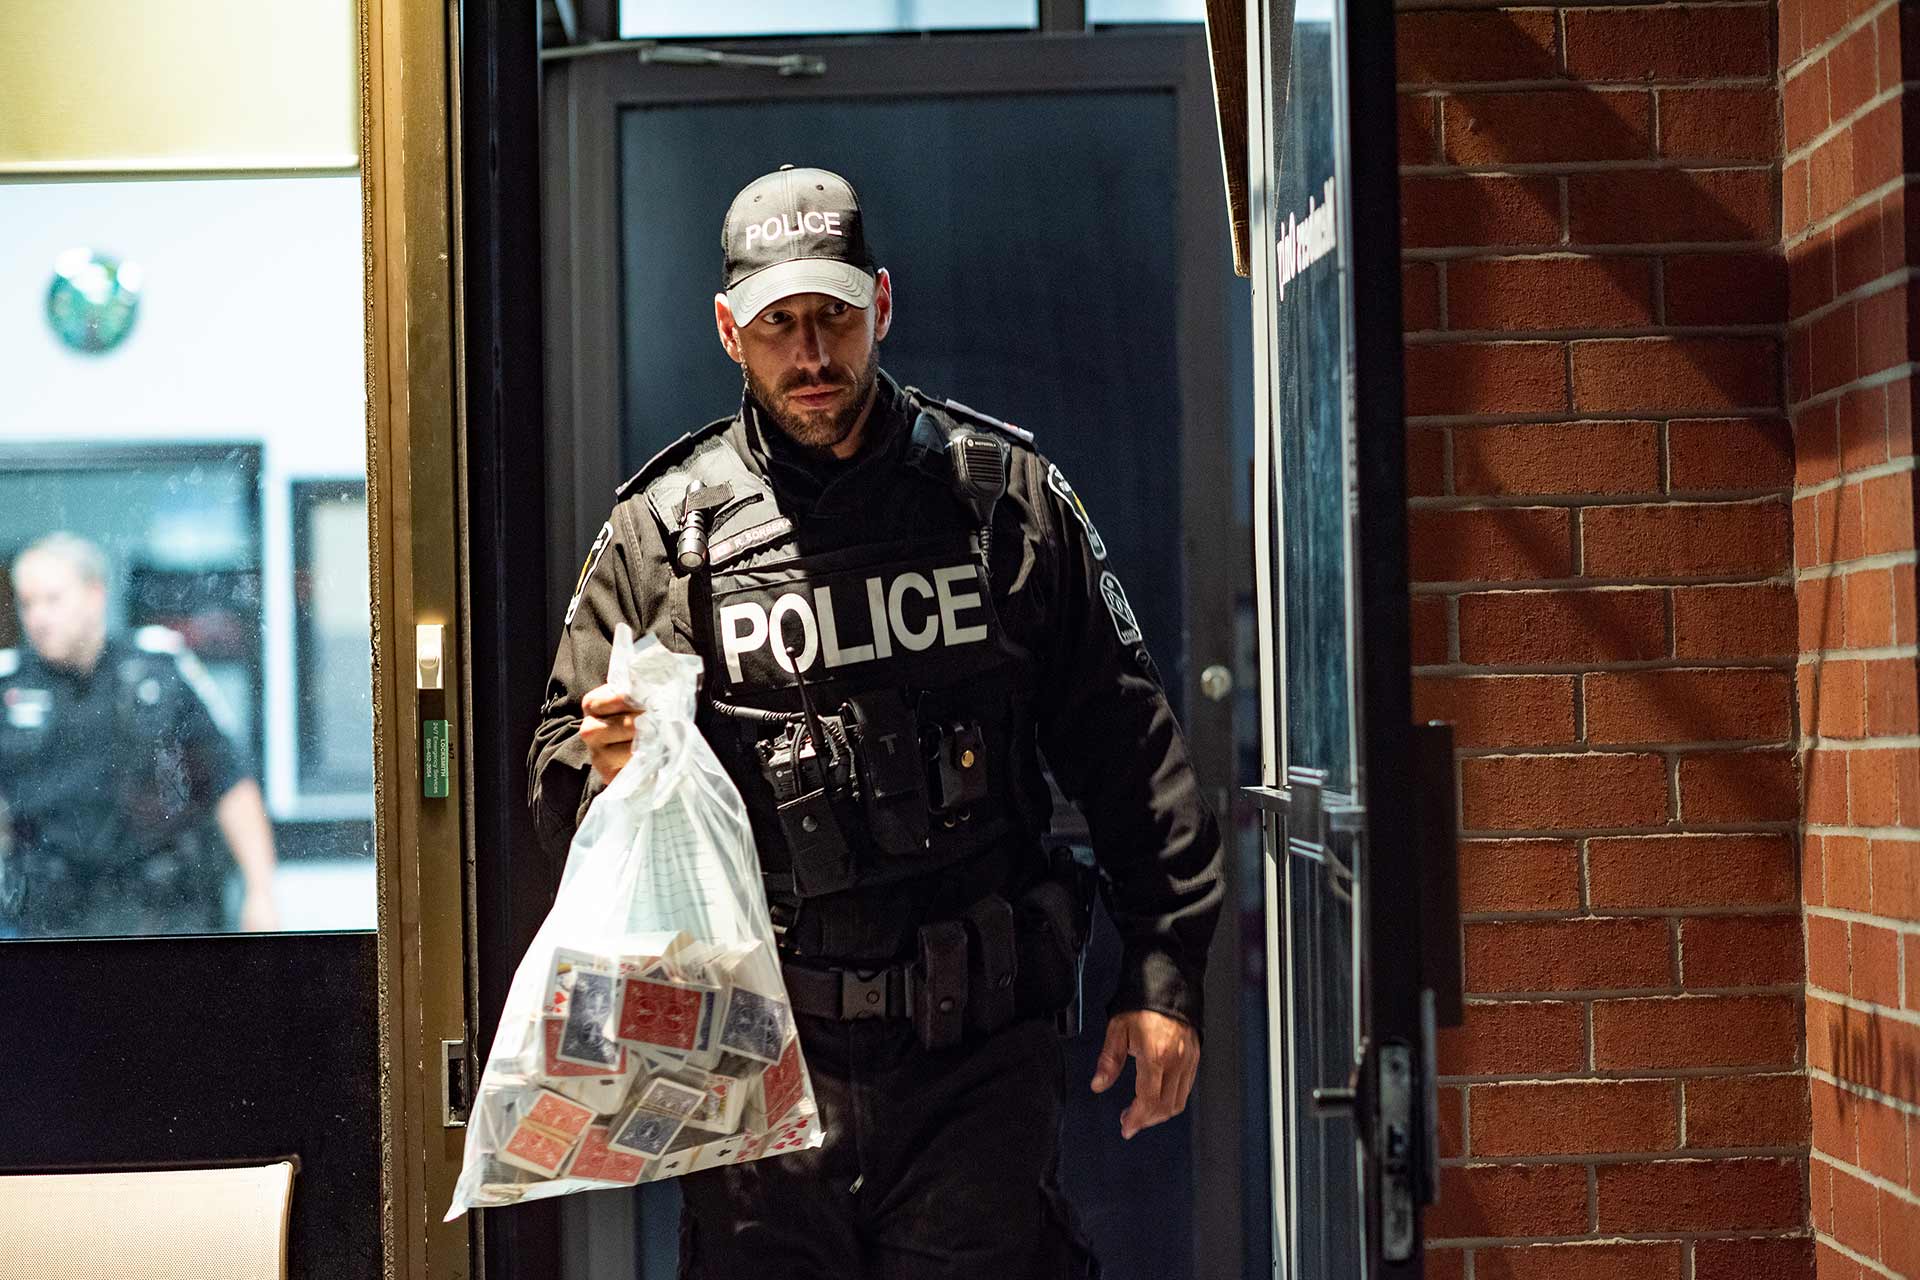 An officer emerges from a building holding alleged gambling paraphernalia eiqreidrrirtinv